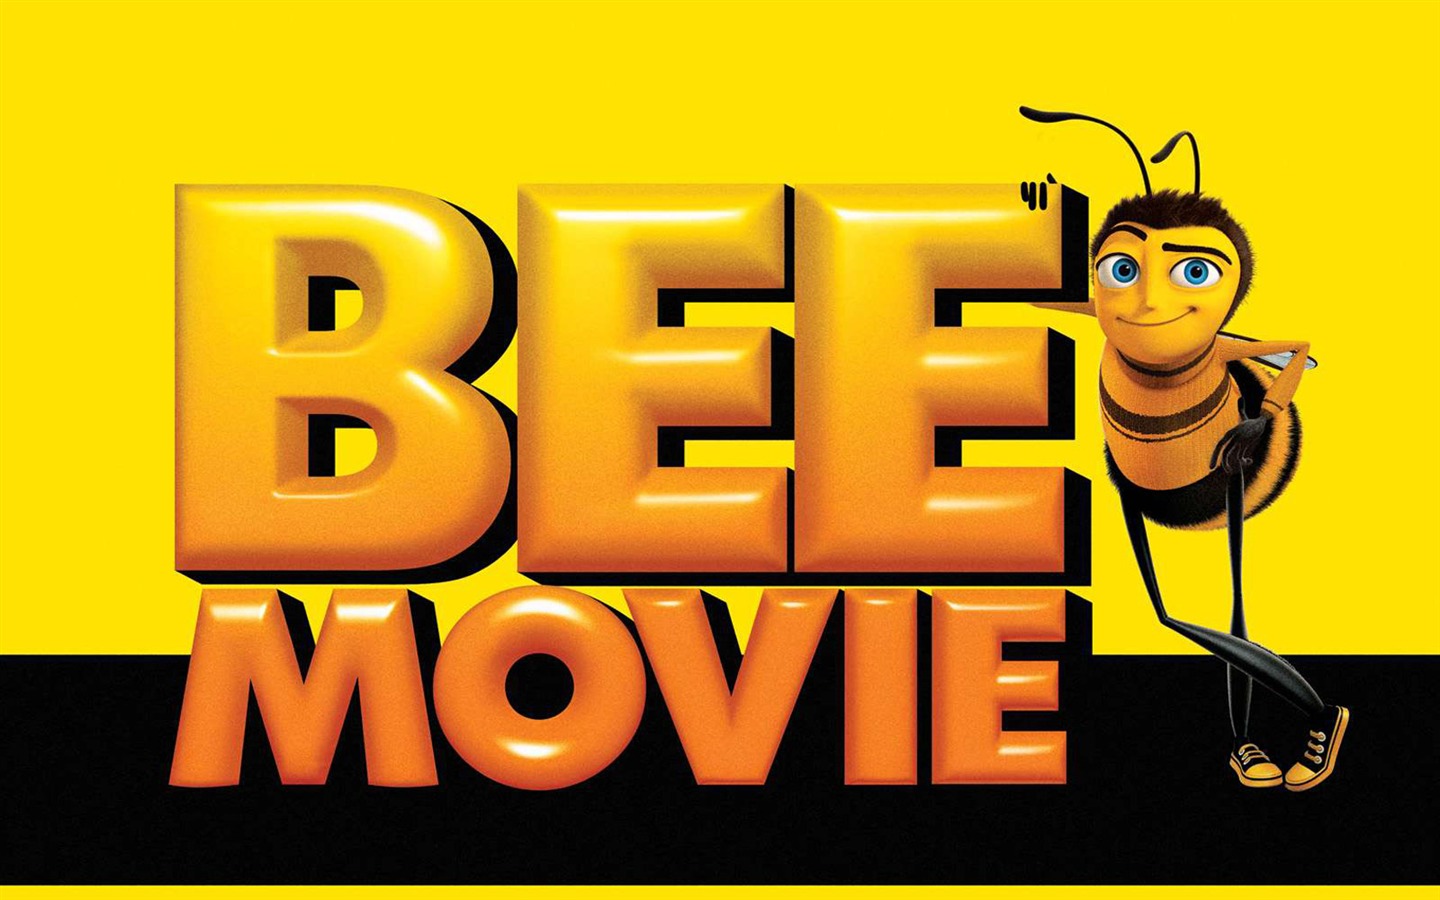 Bee Movie HD papel tapiz #20 - 1440x900